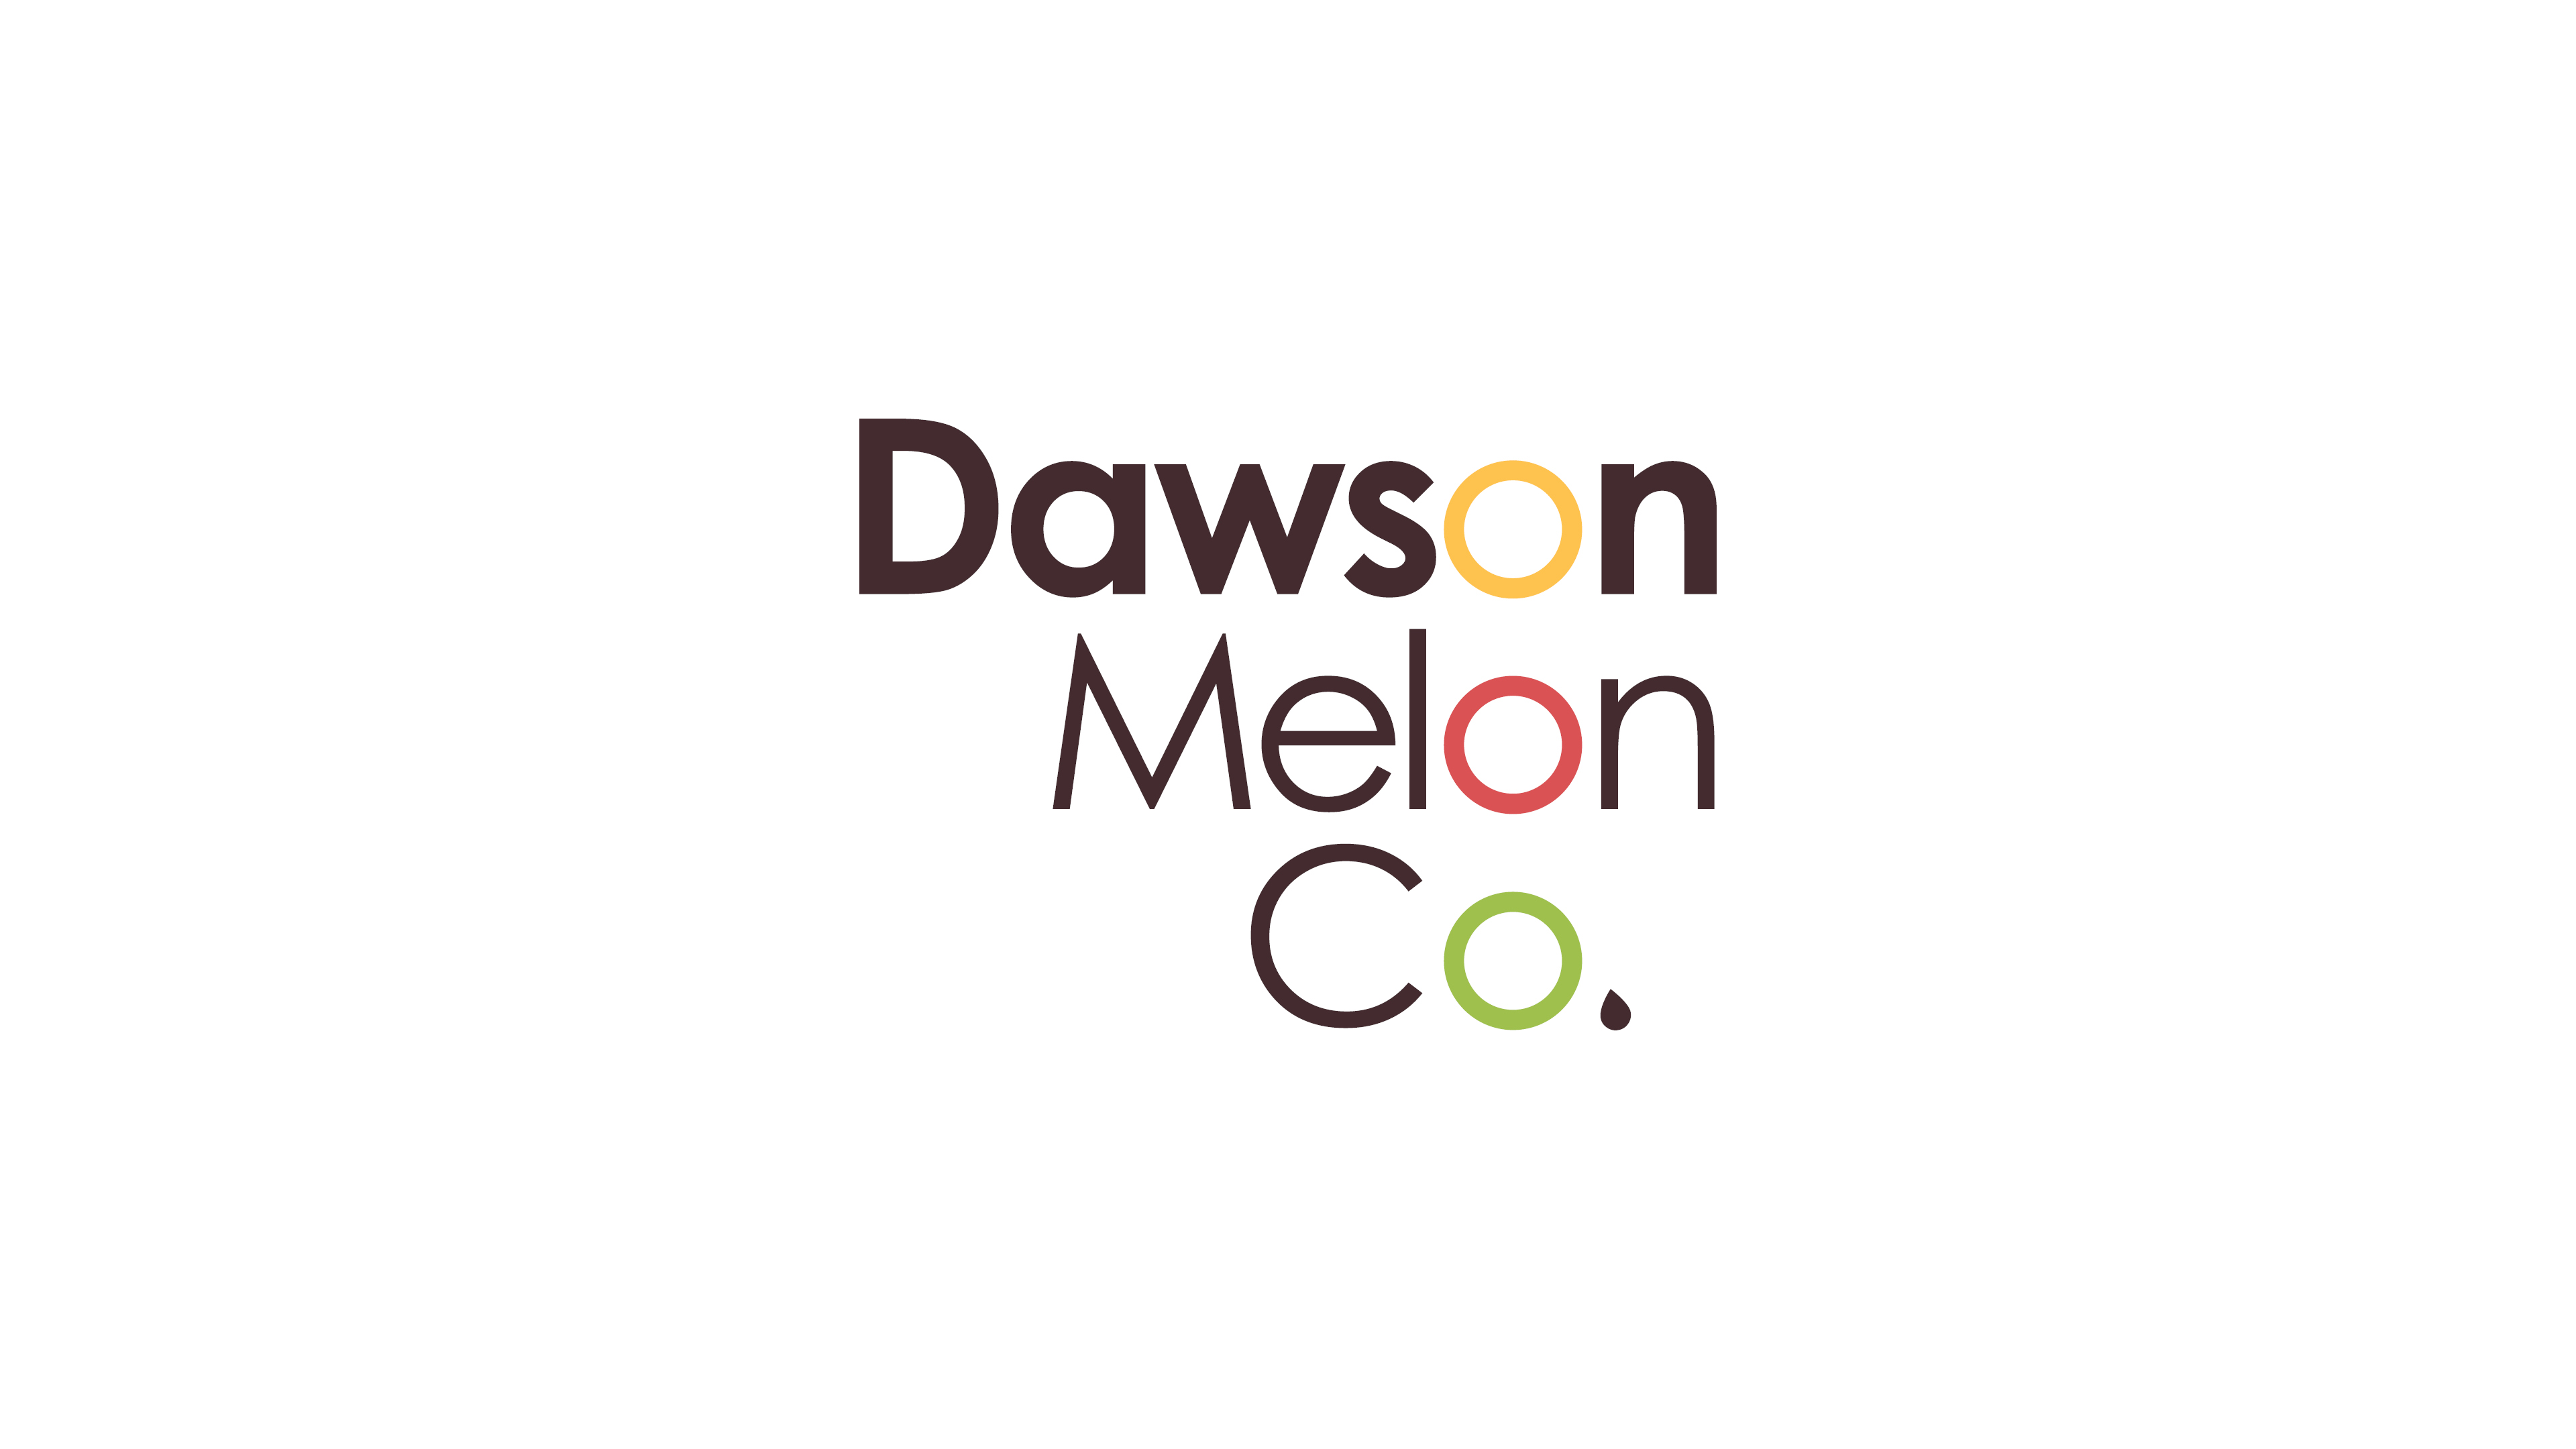 Dawson Melon Co. Logo Design - Saunders Design Group